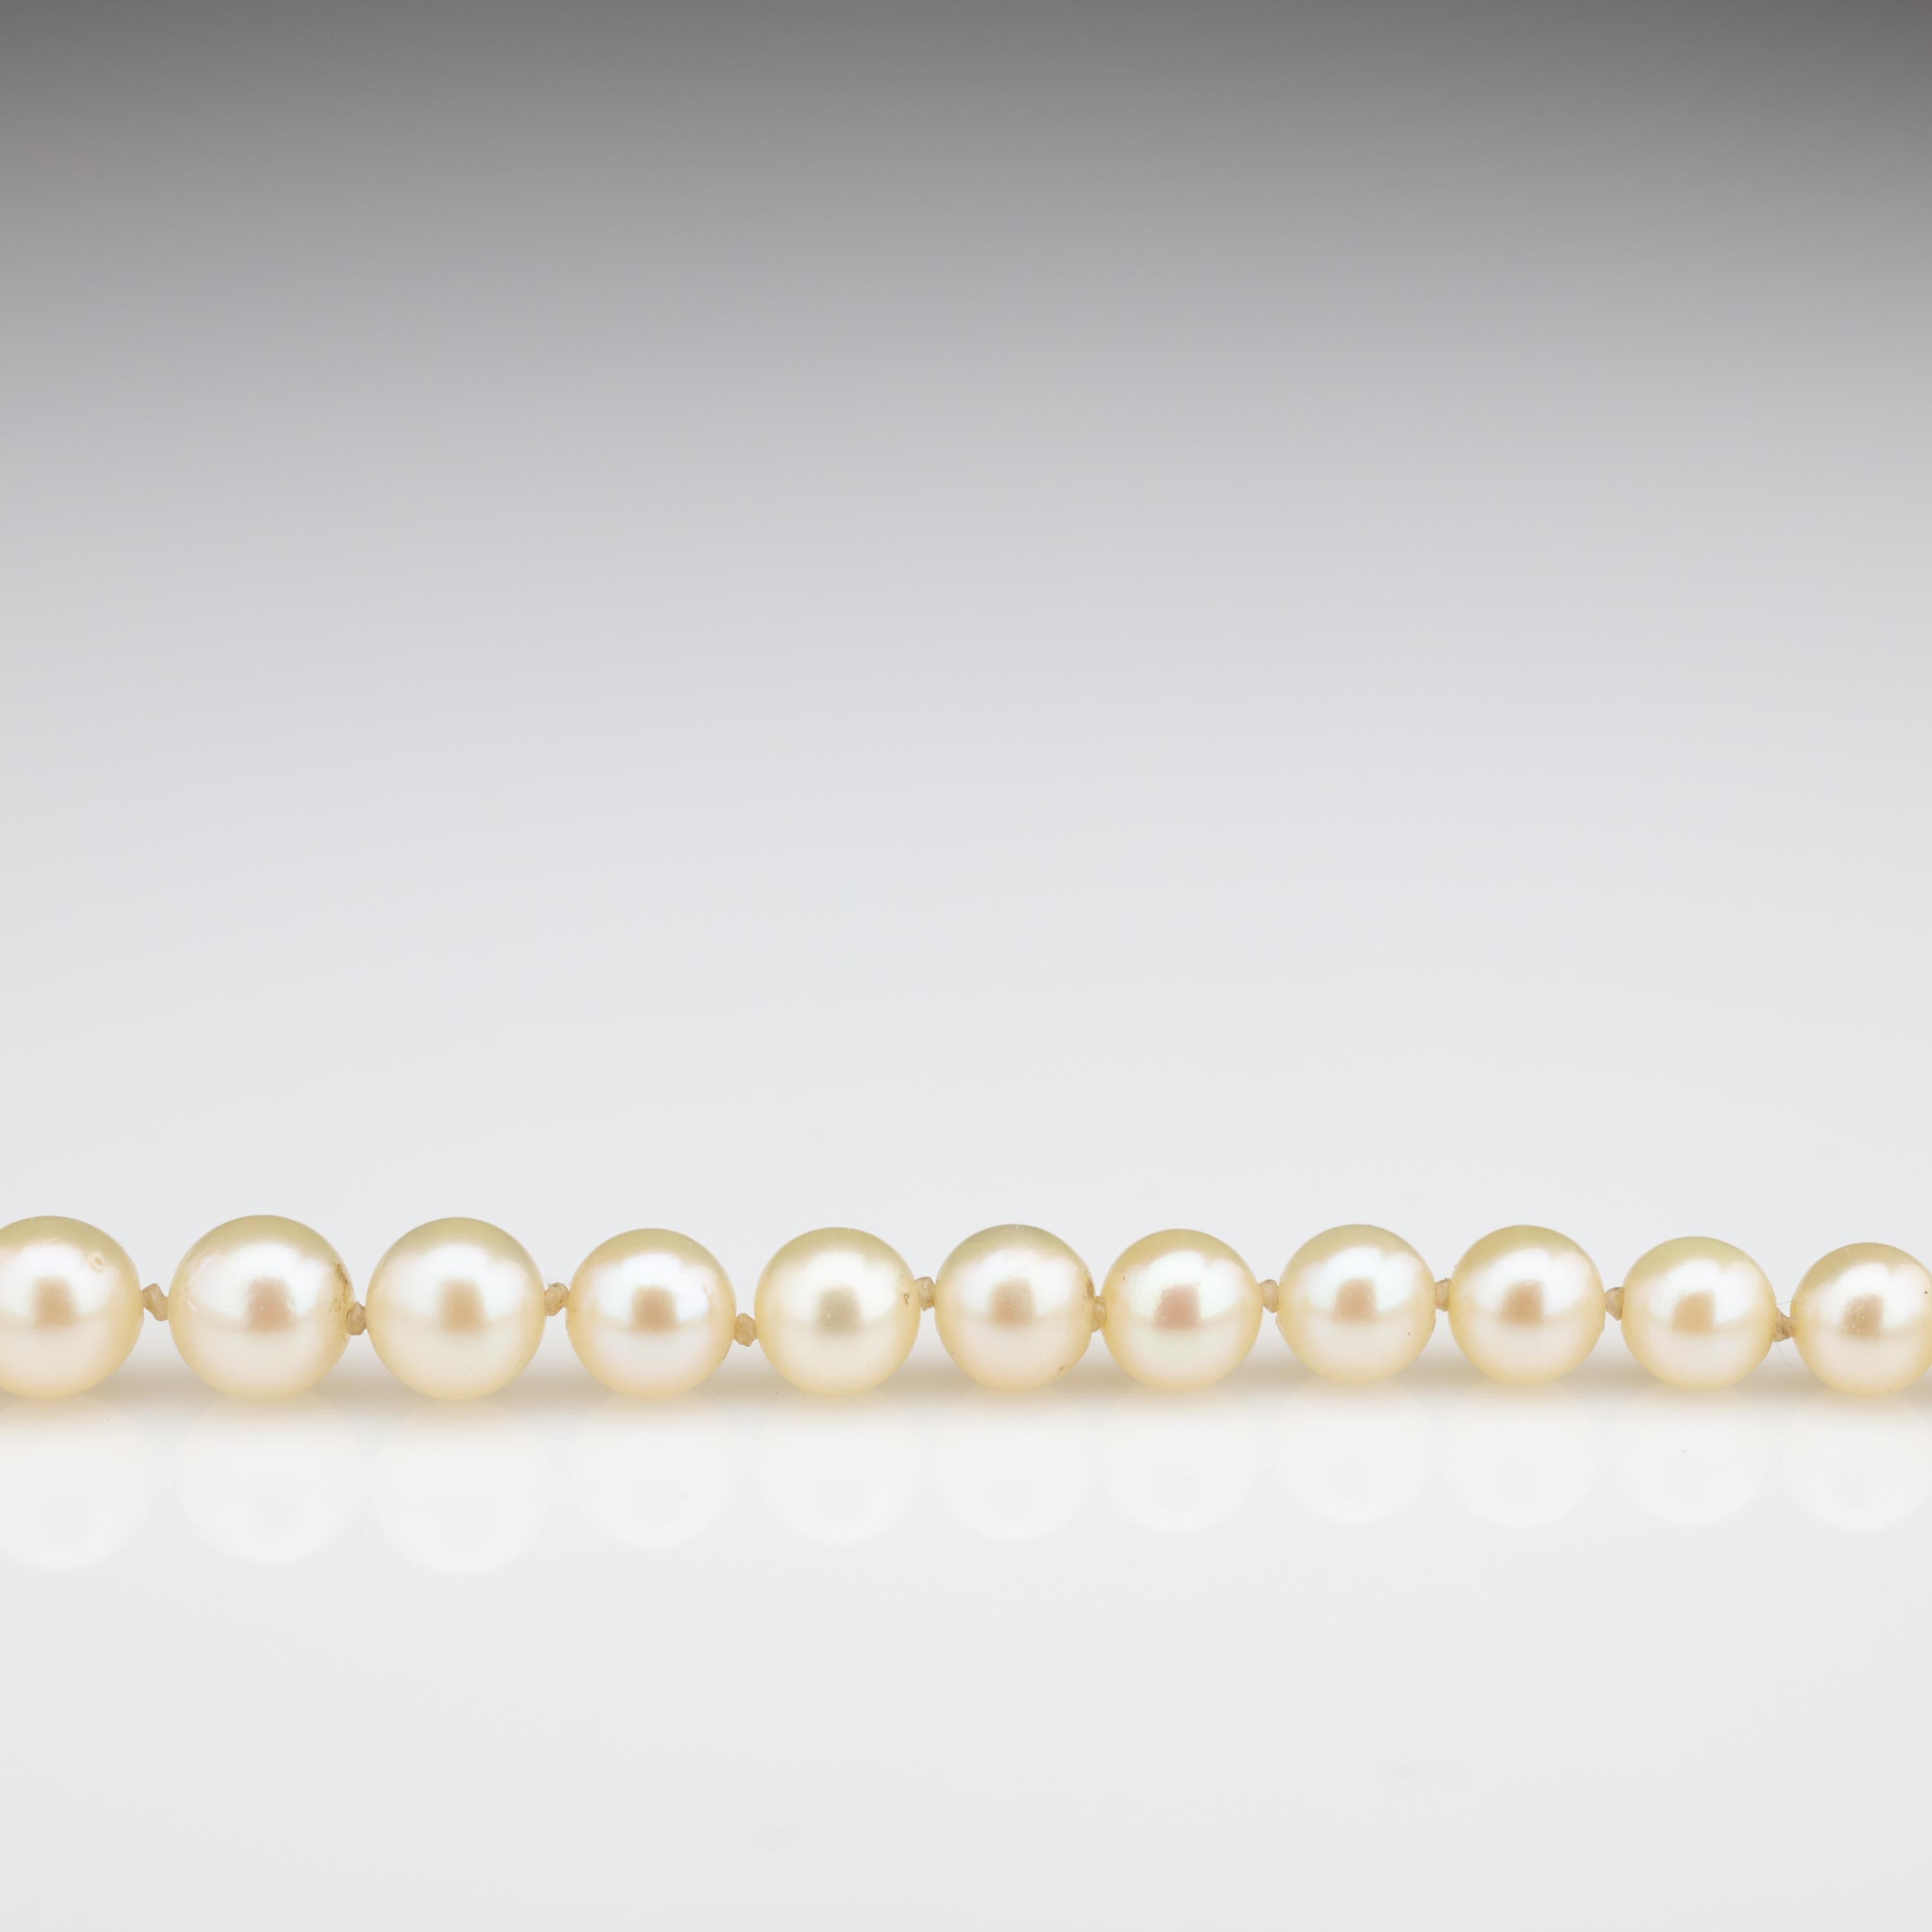 Mikimoto Original Strand of First Viable Cultured Pearls, circa 1920s 3